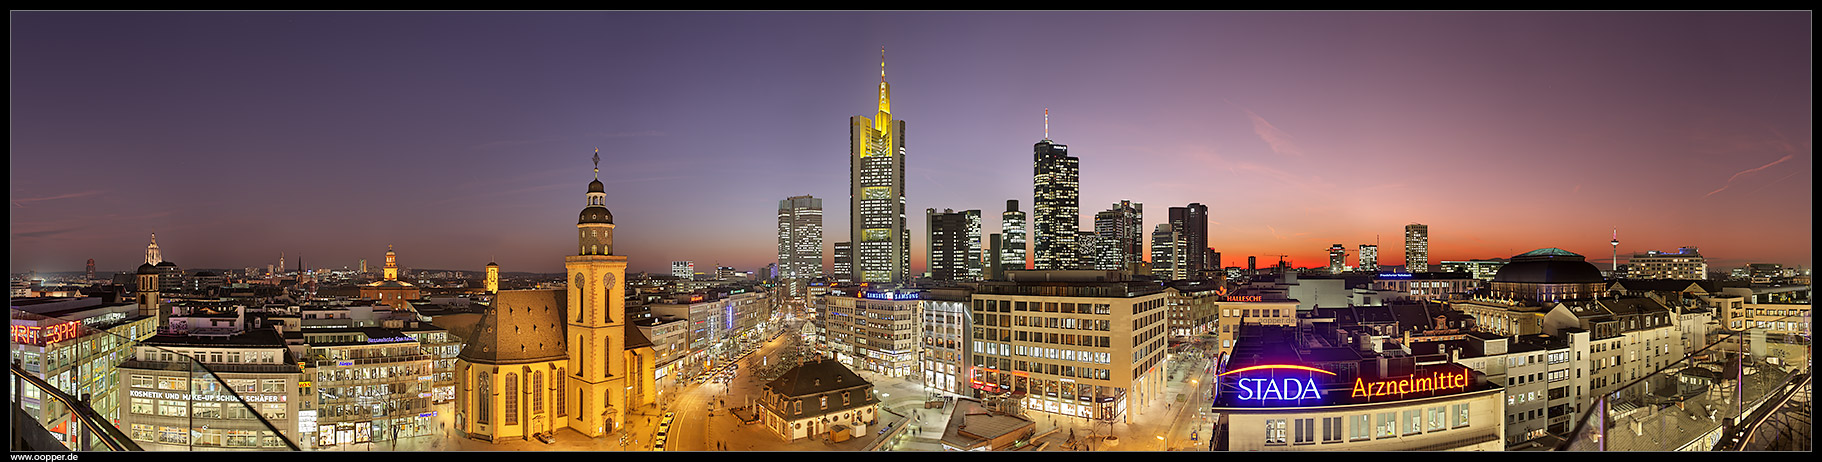 Fotoausstellung "Panorama Frankfurt"